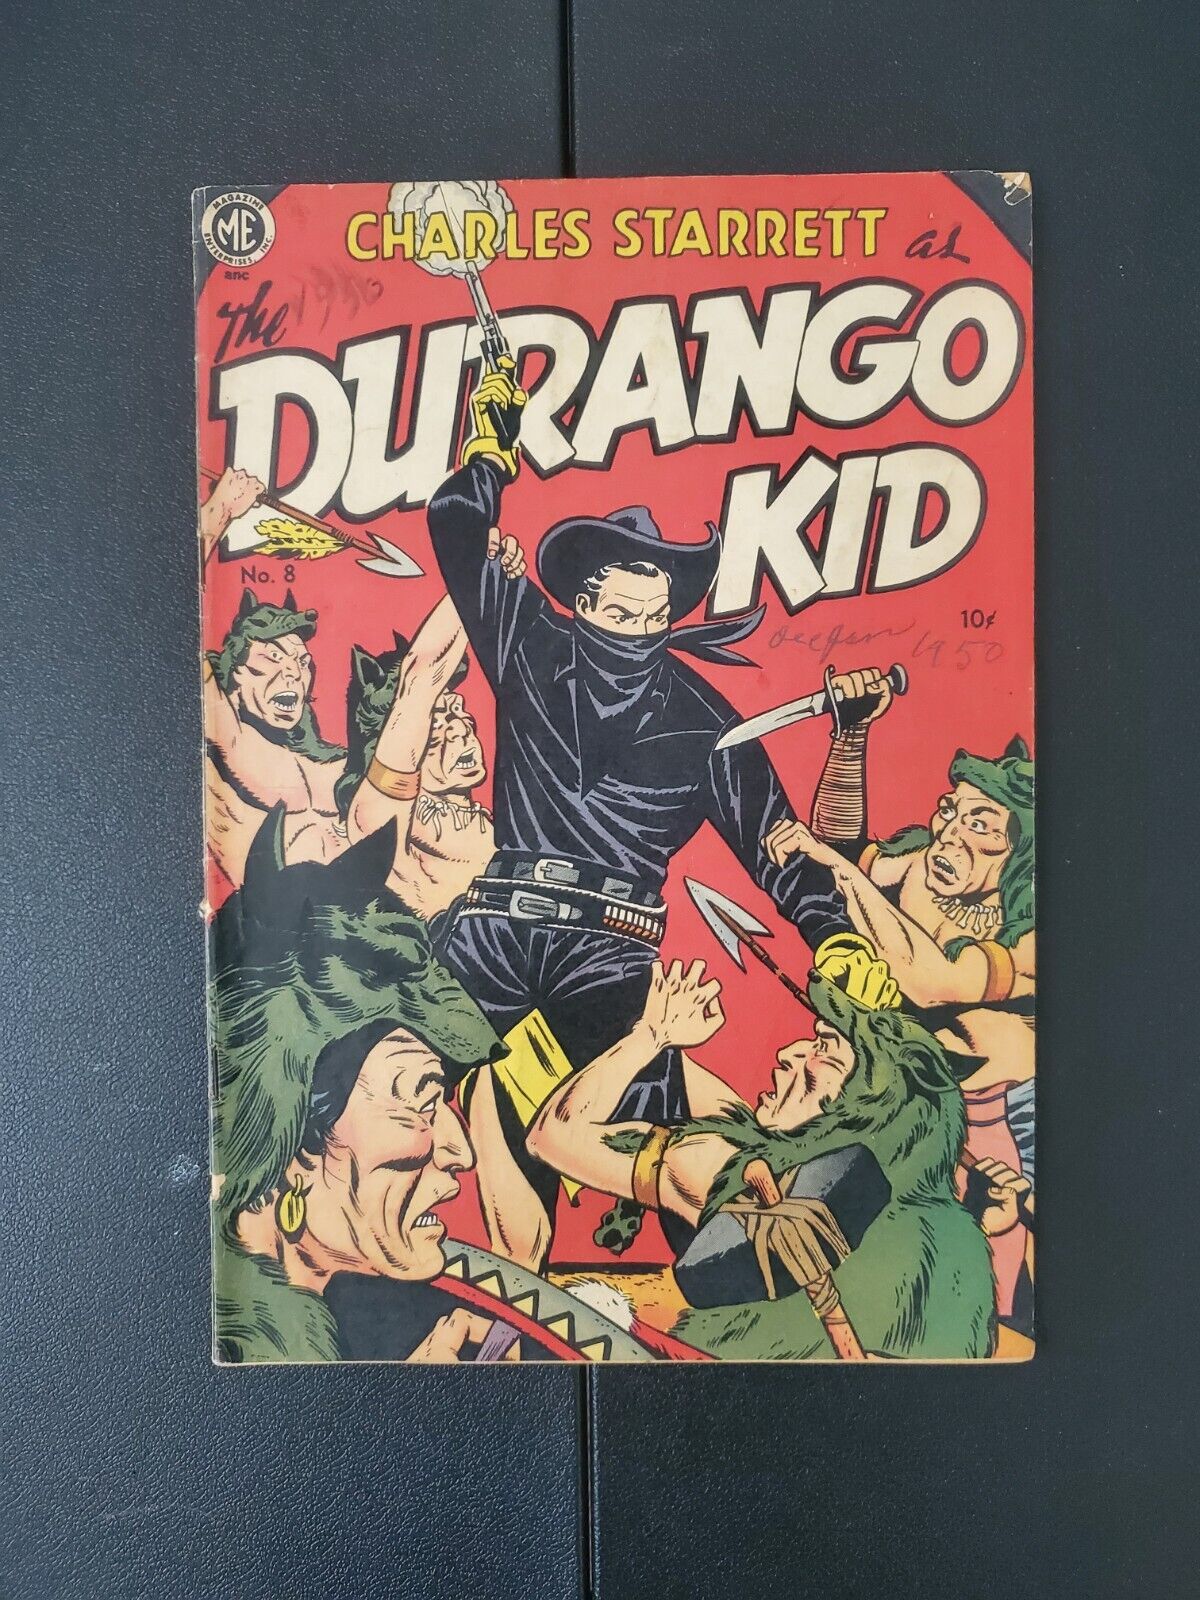 DURANGO KID #8 1950 EARLY FRANK FRAZETTA ART GOLDEN AGE WESTERN